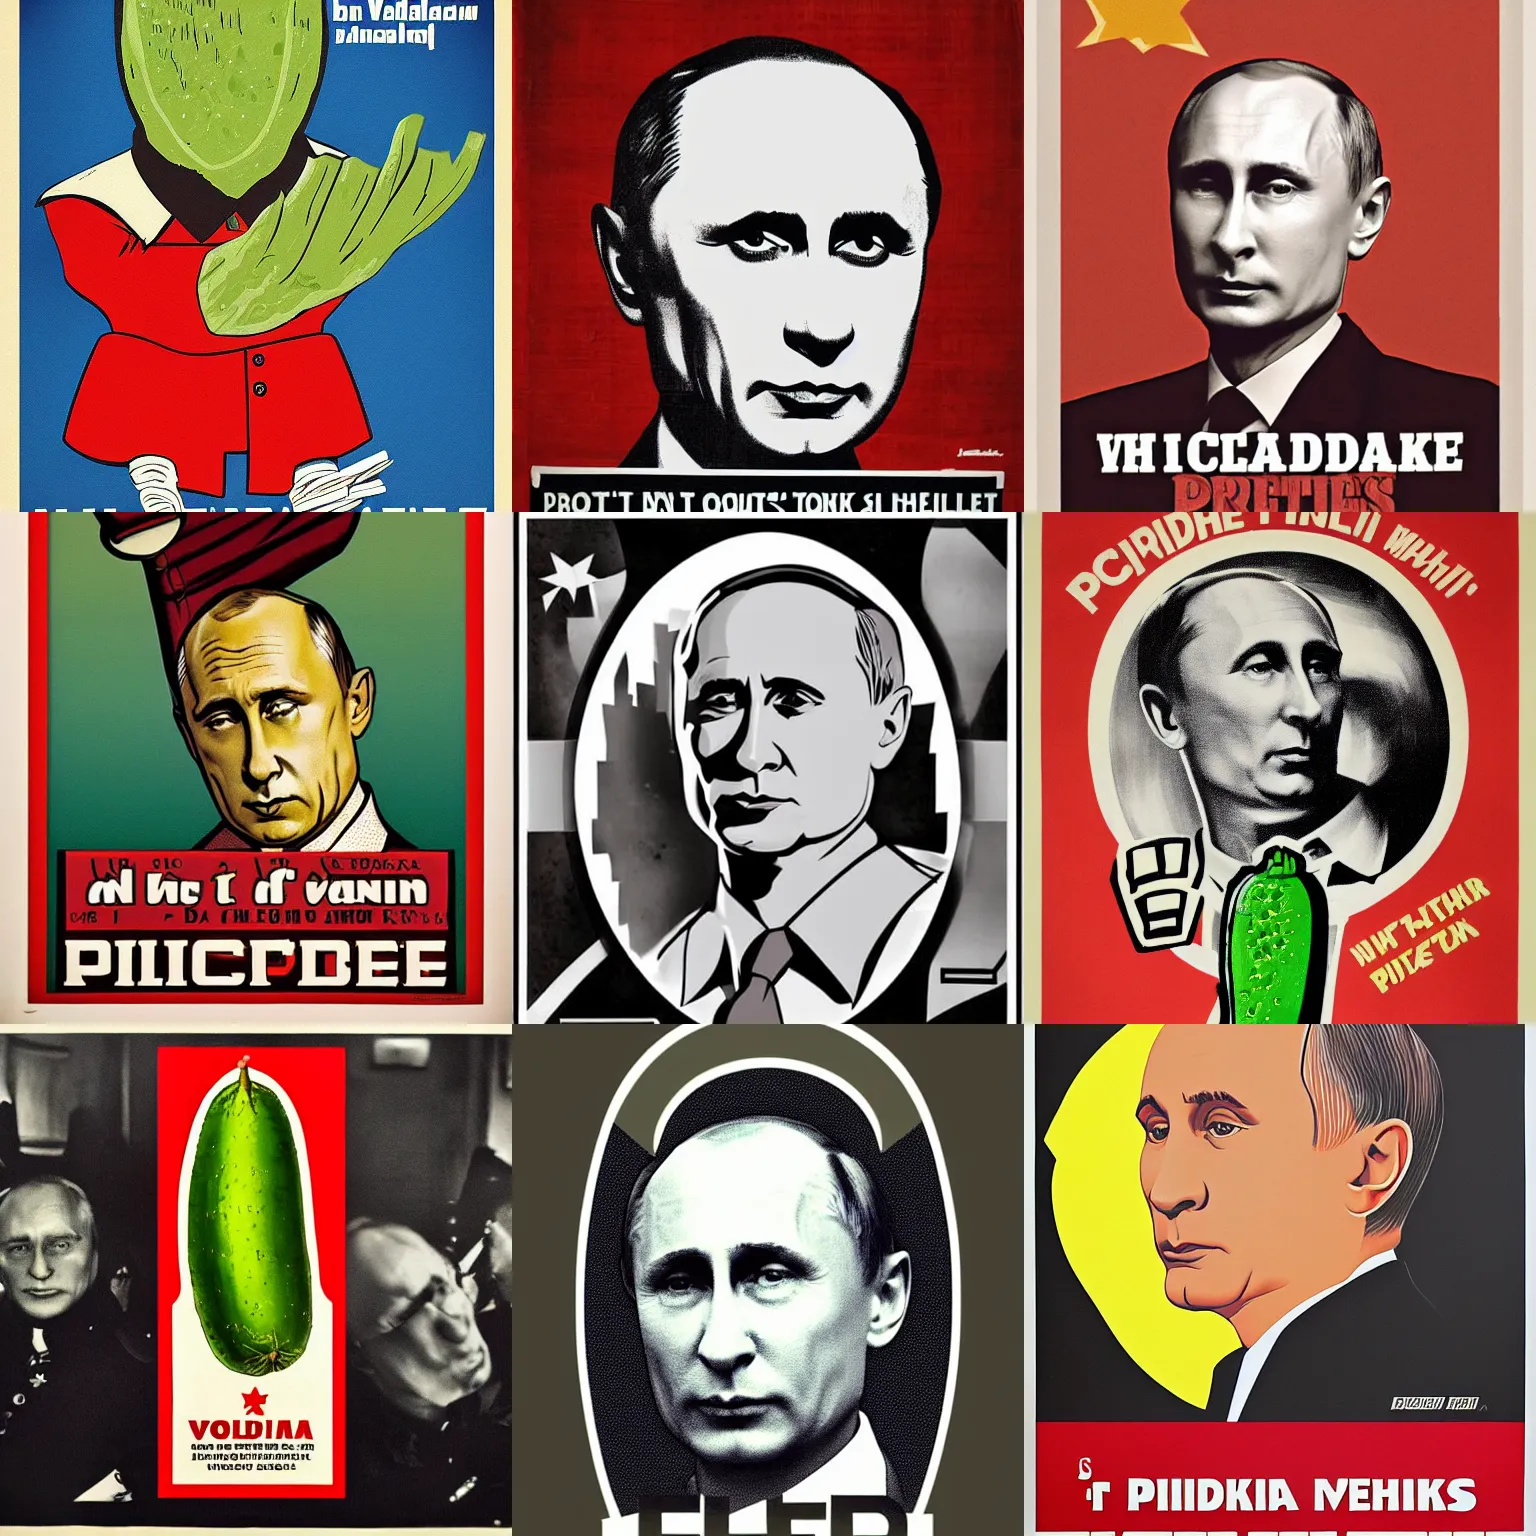 Prompt: propaganda poster of a pickle that looks like vladimir putin